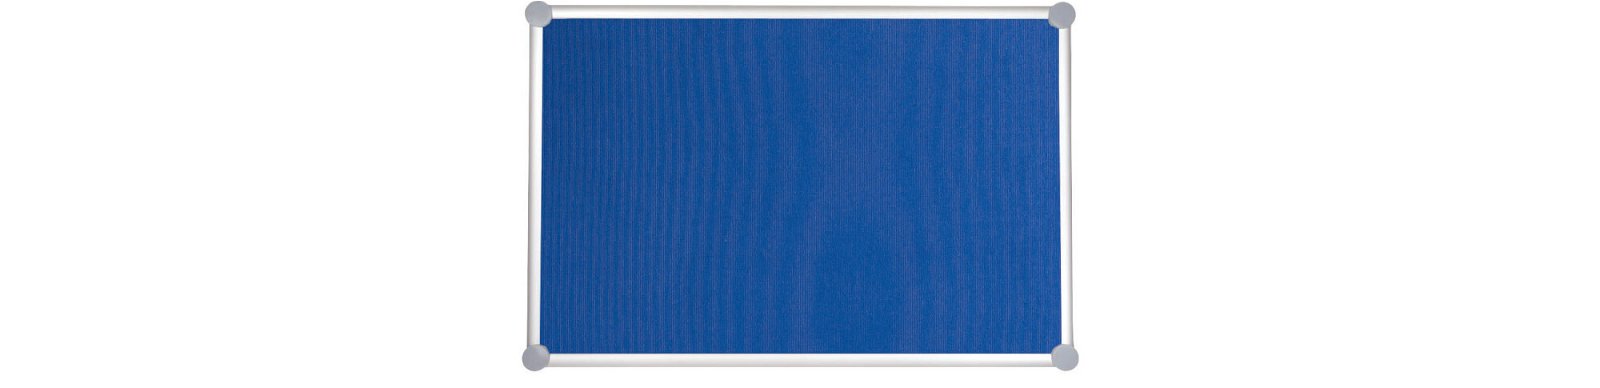 Pinnboard 2000 MAULpro, Textil, 90x120 cm, blau